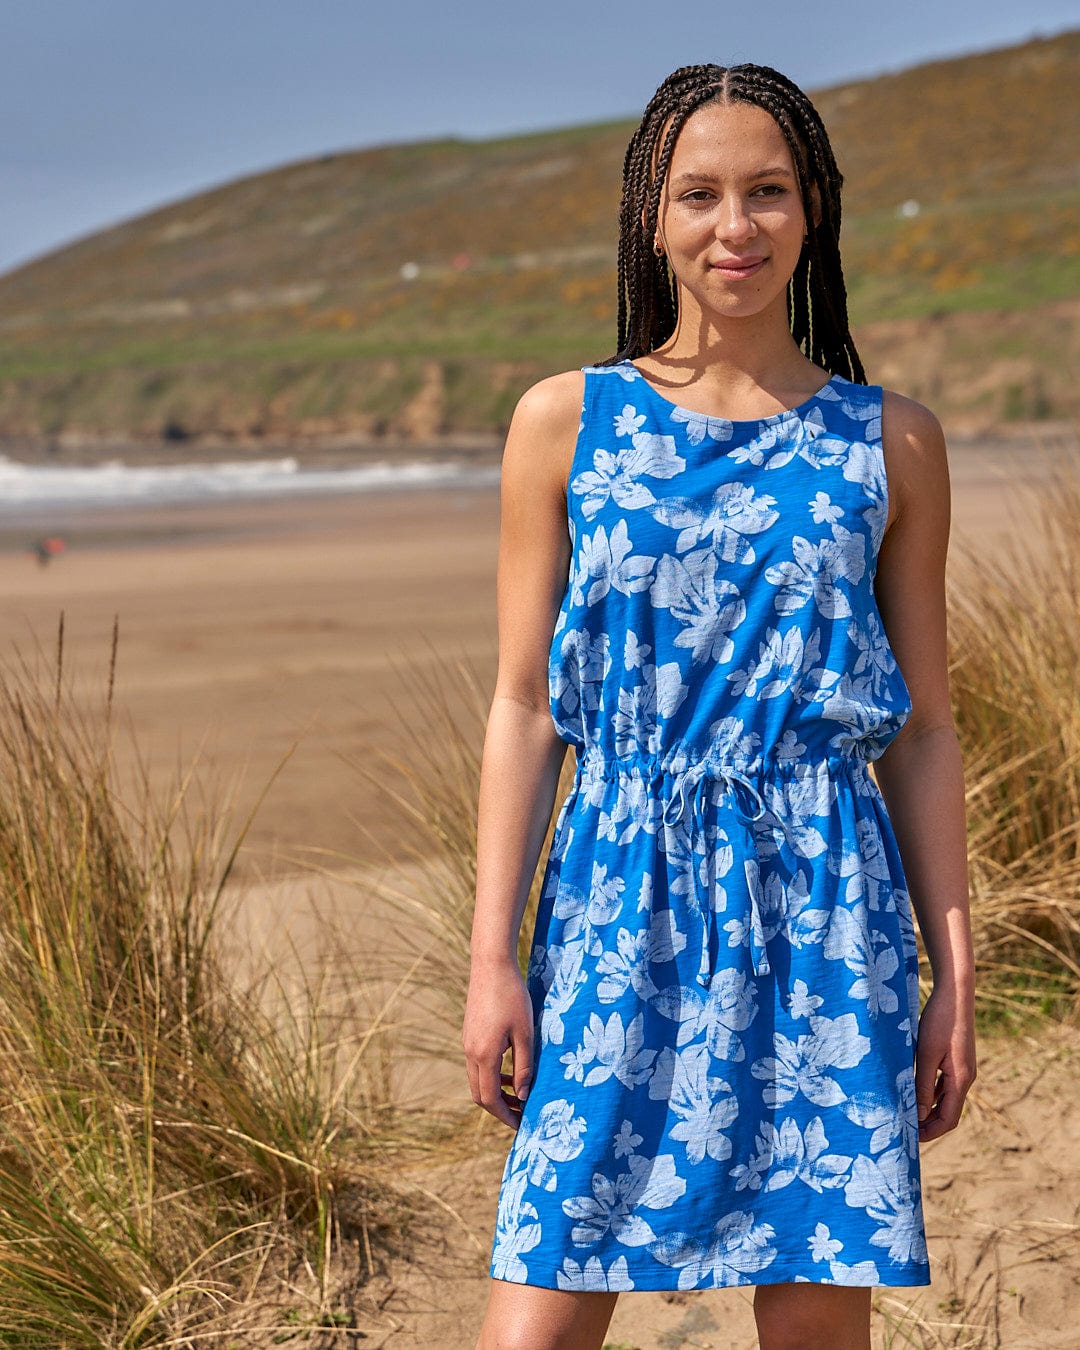 A woman in a Saltrock Floral - Womens Tie Vest Dress - Blue standing on a beach.